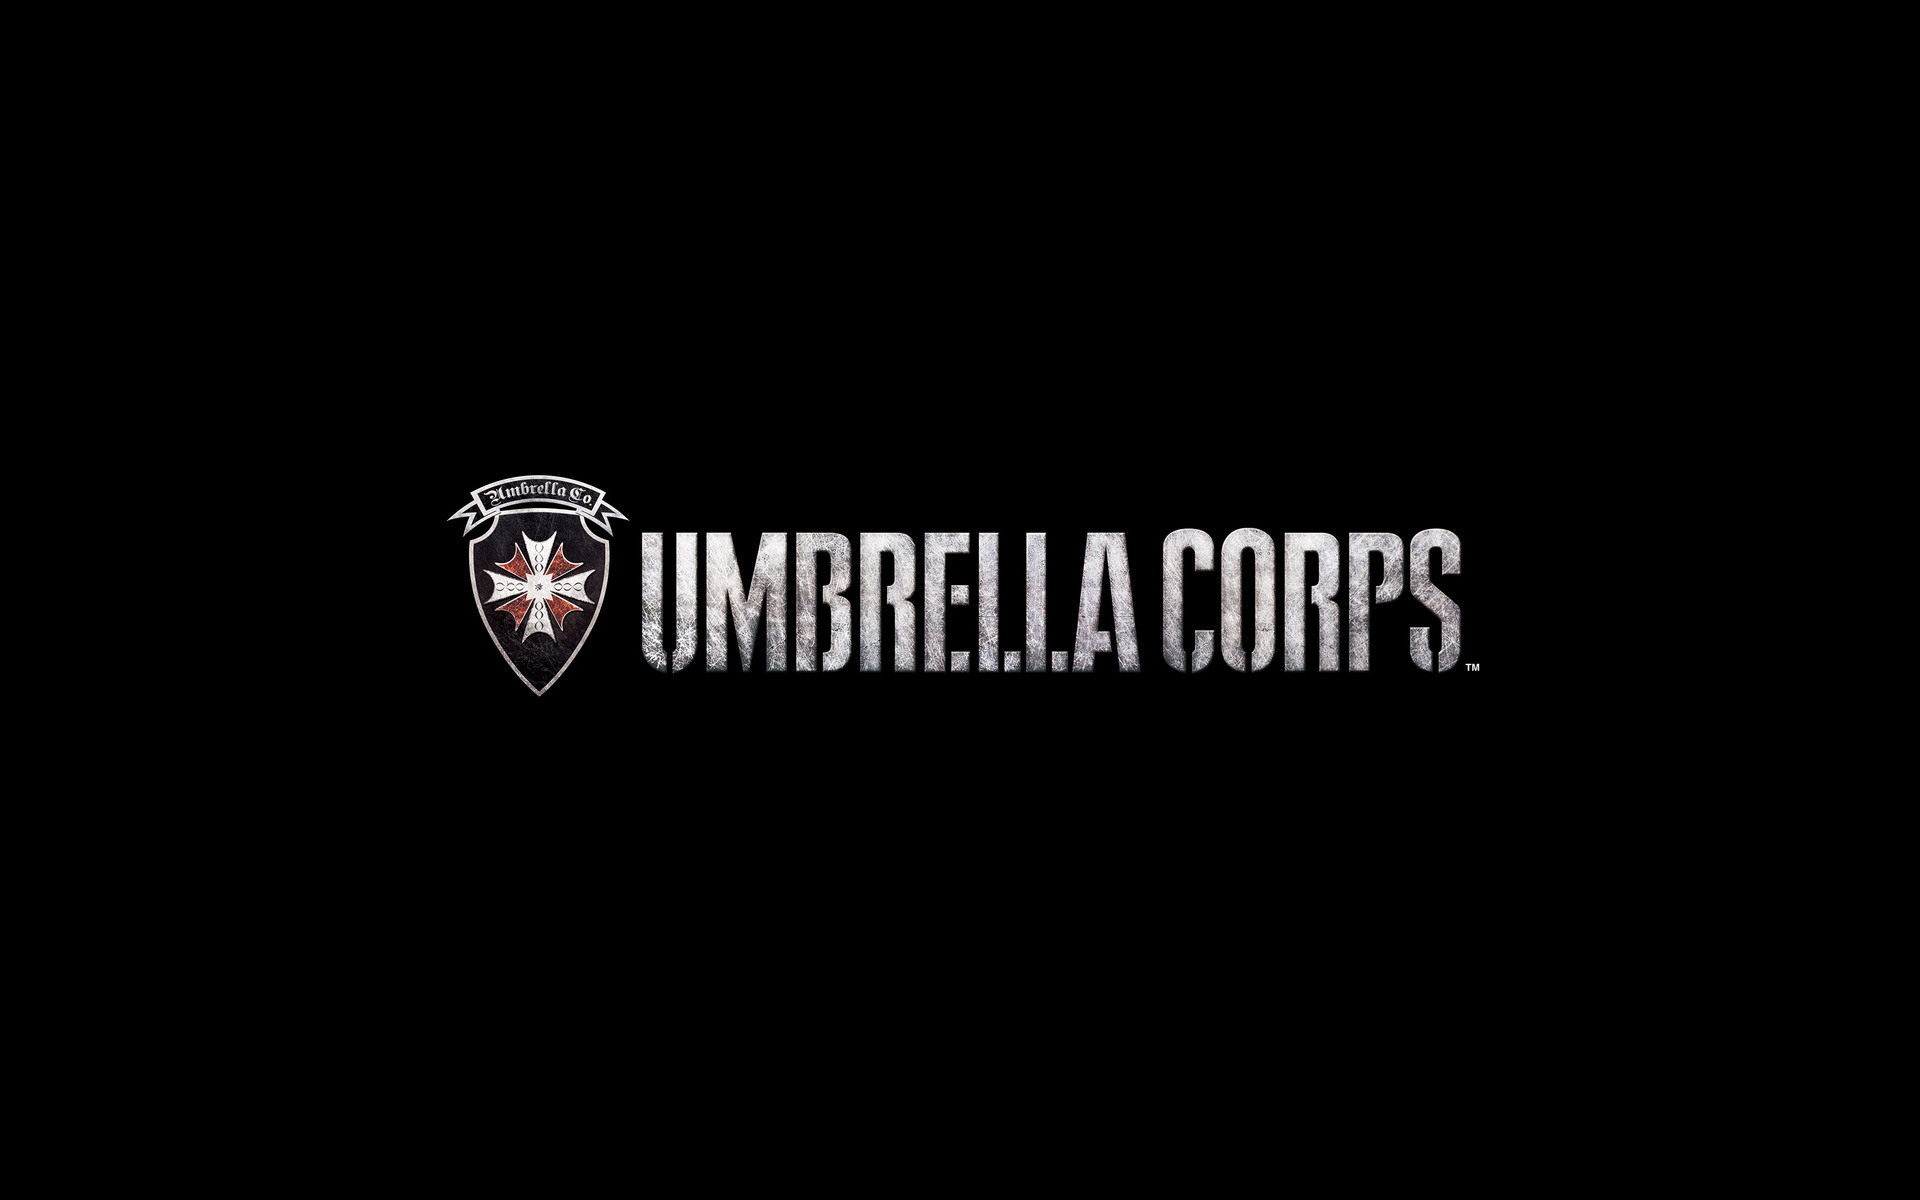 umbrella-corps-logo-ad-1920x1200.jpg